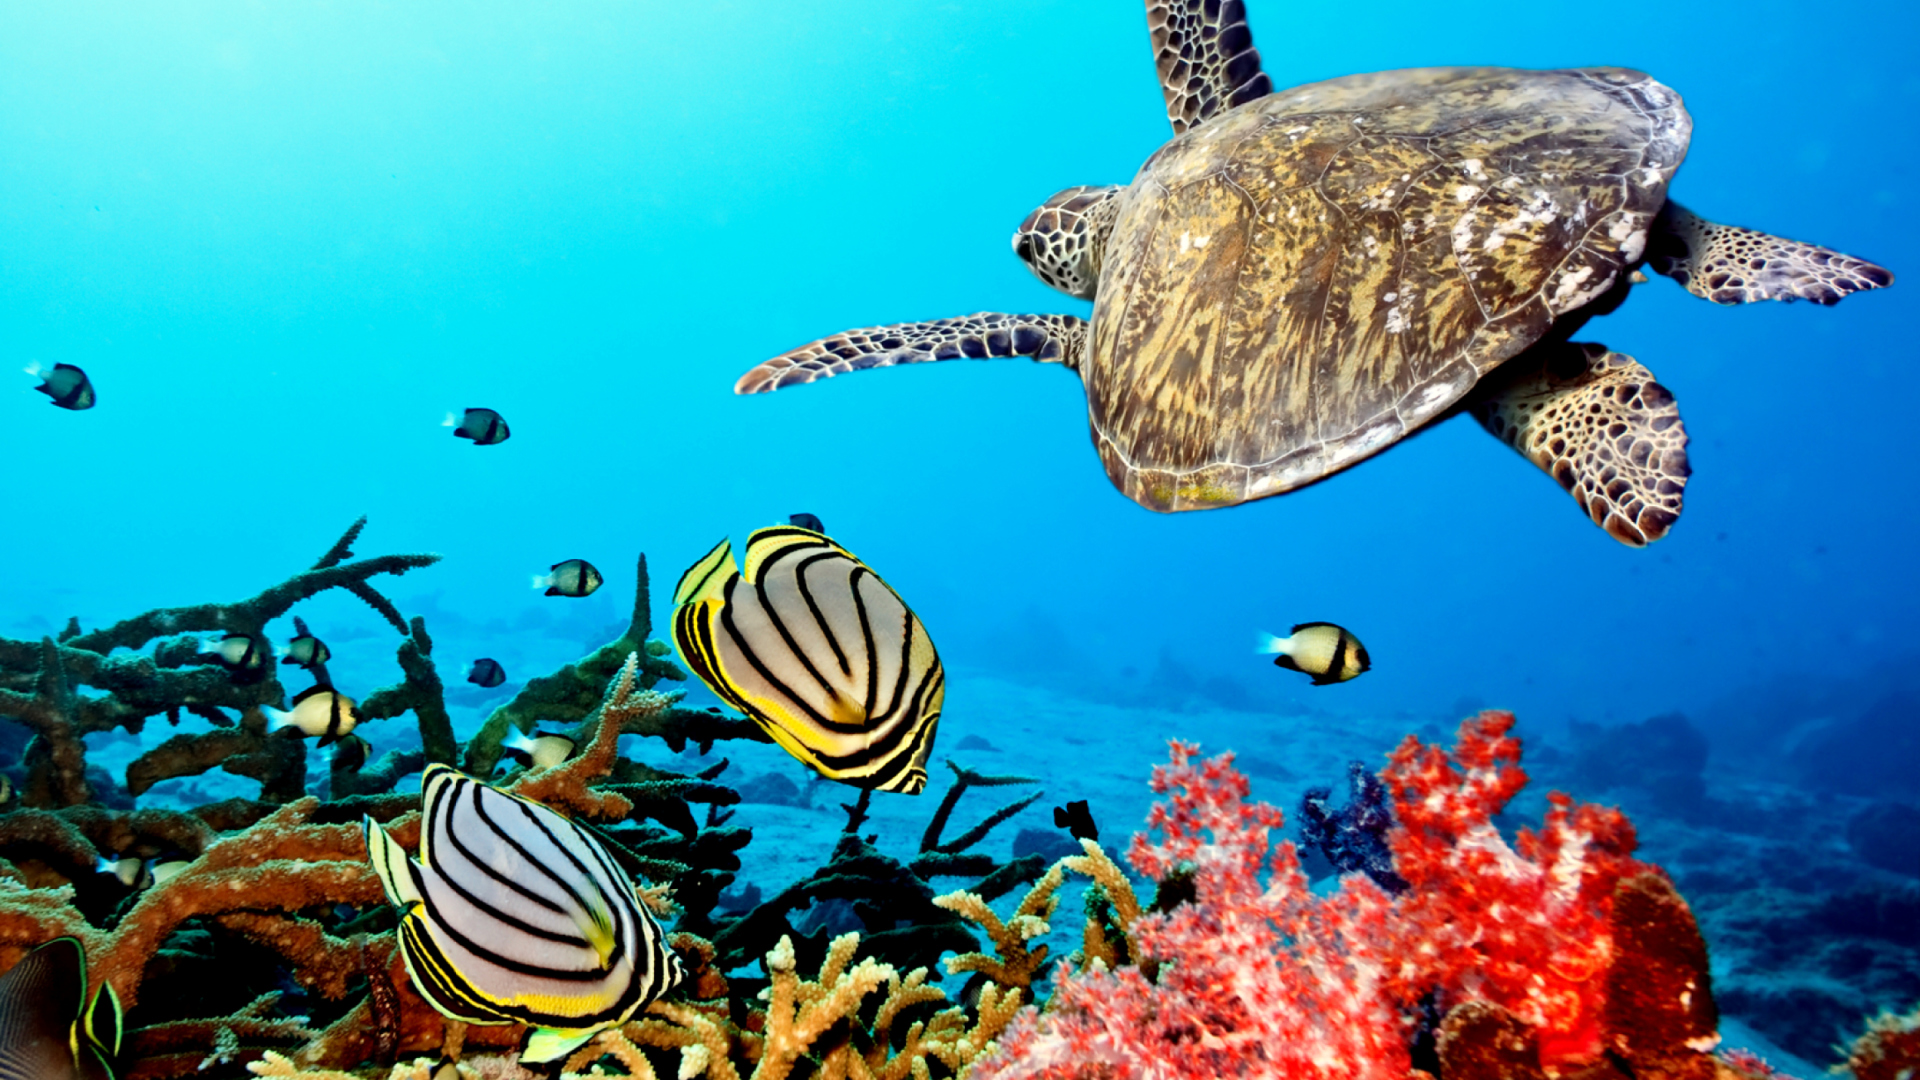 gwalior fort wallpaper gallery,sea turtle,hawksbill sea turtle,underwater,marine biology,green sea turtle